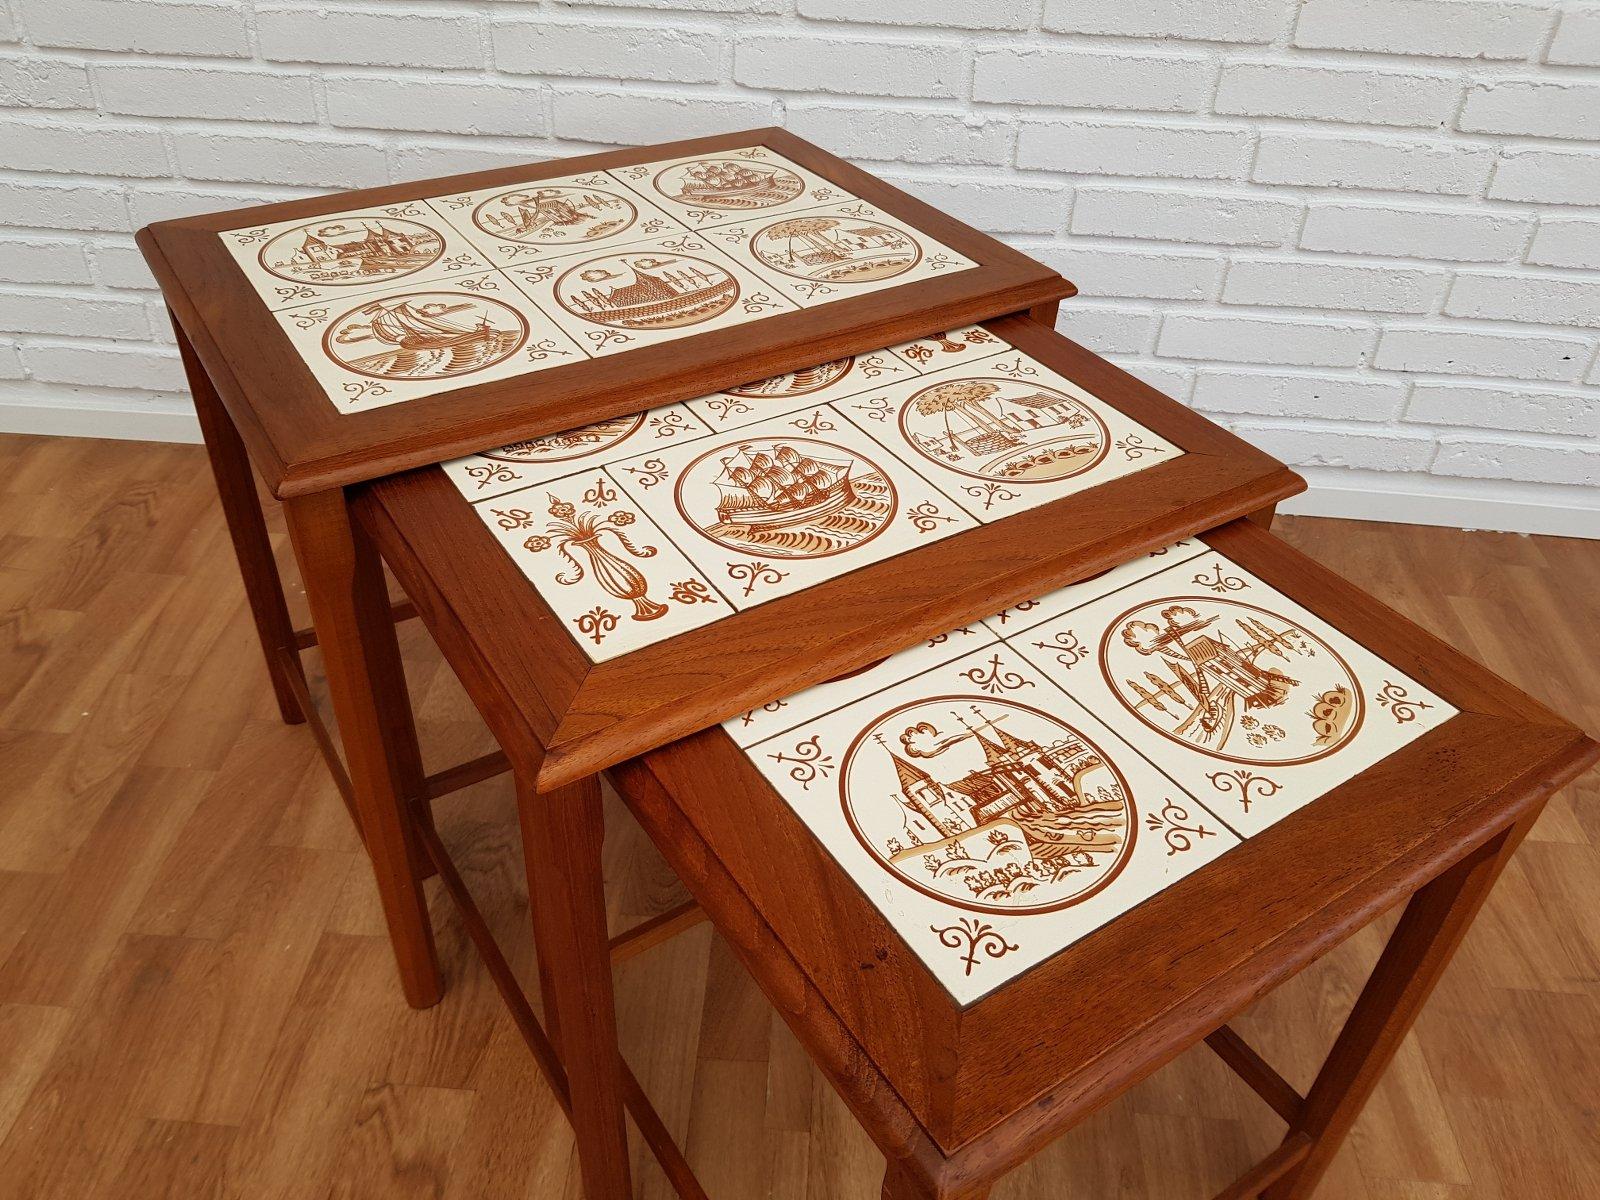 70s, Nesting Table, Danish Design, Hand-Painted Ceramic Tiles, Teak Wood For Sale 6